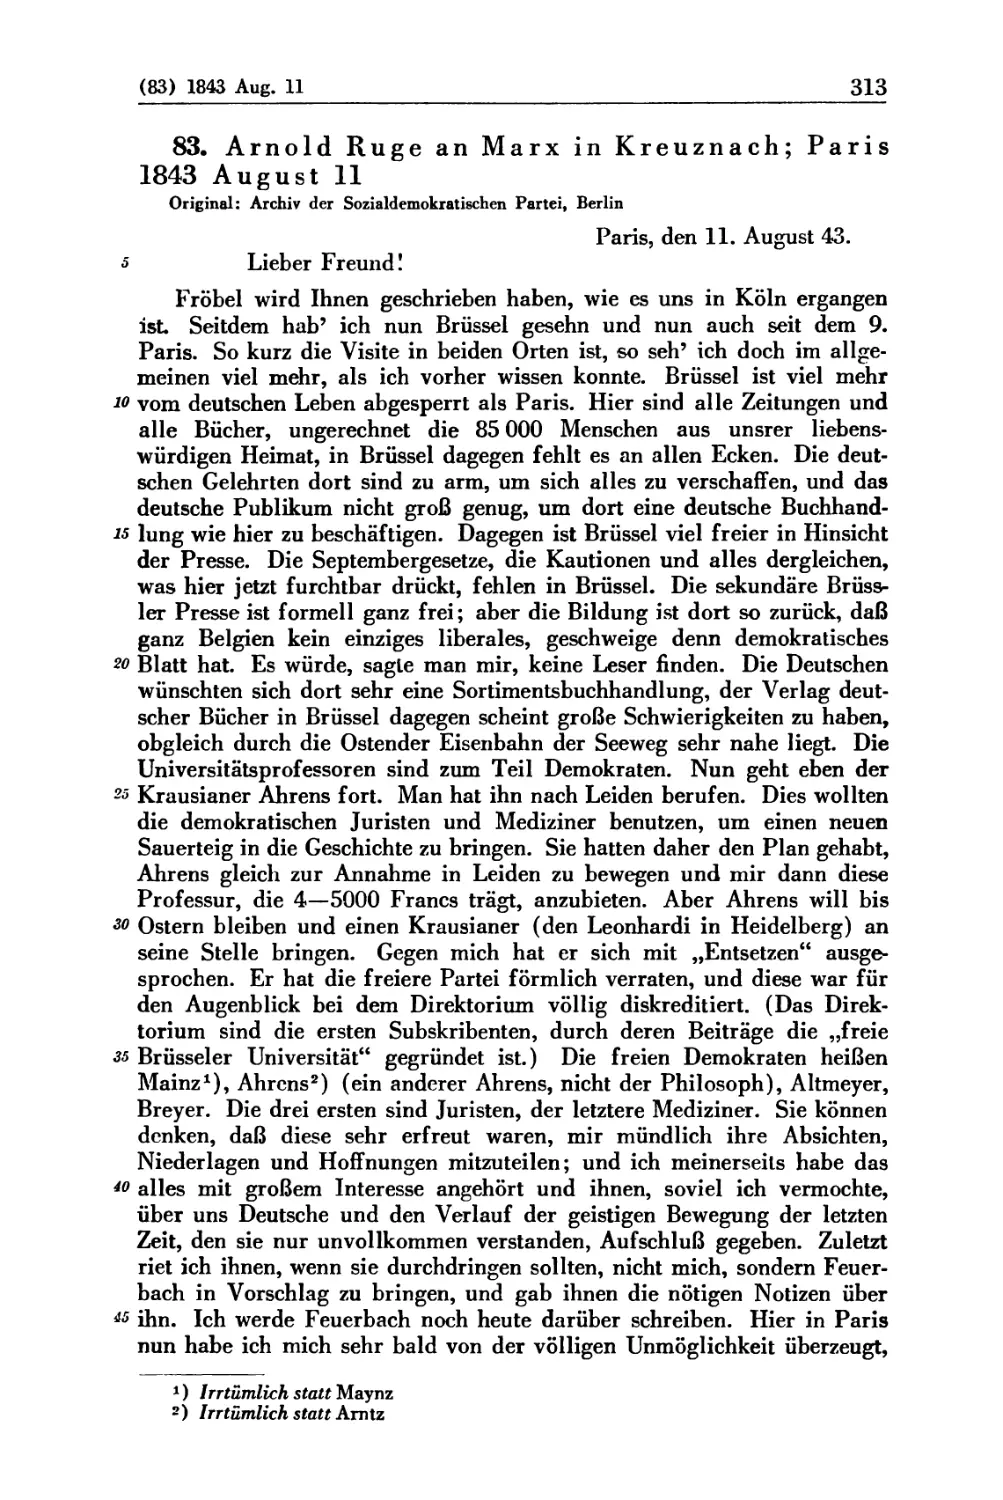 83. Arnold Ruge an Marx in Kreuznach; Paris 1843 August 11